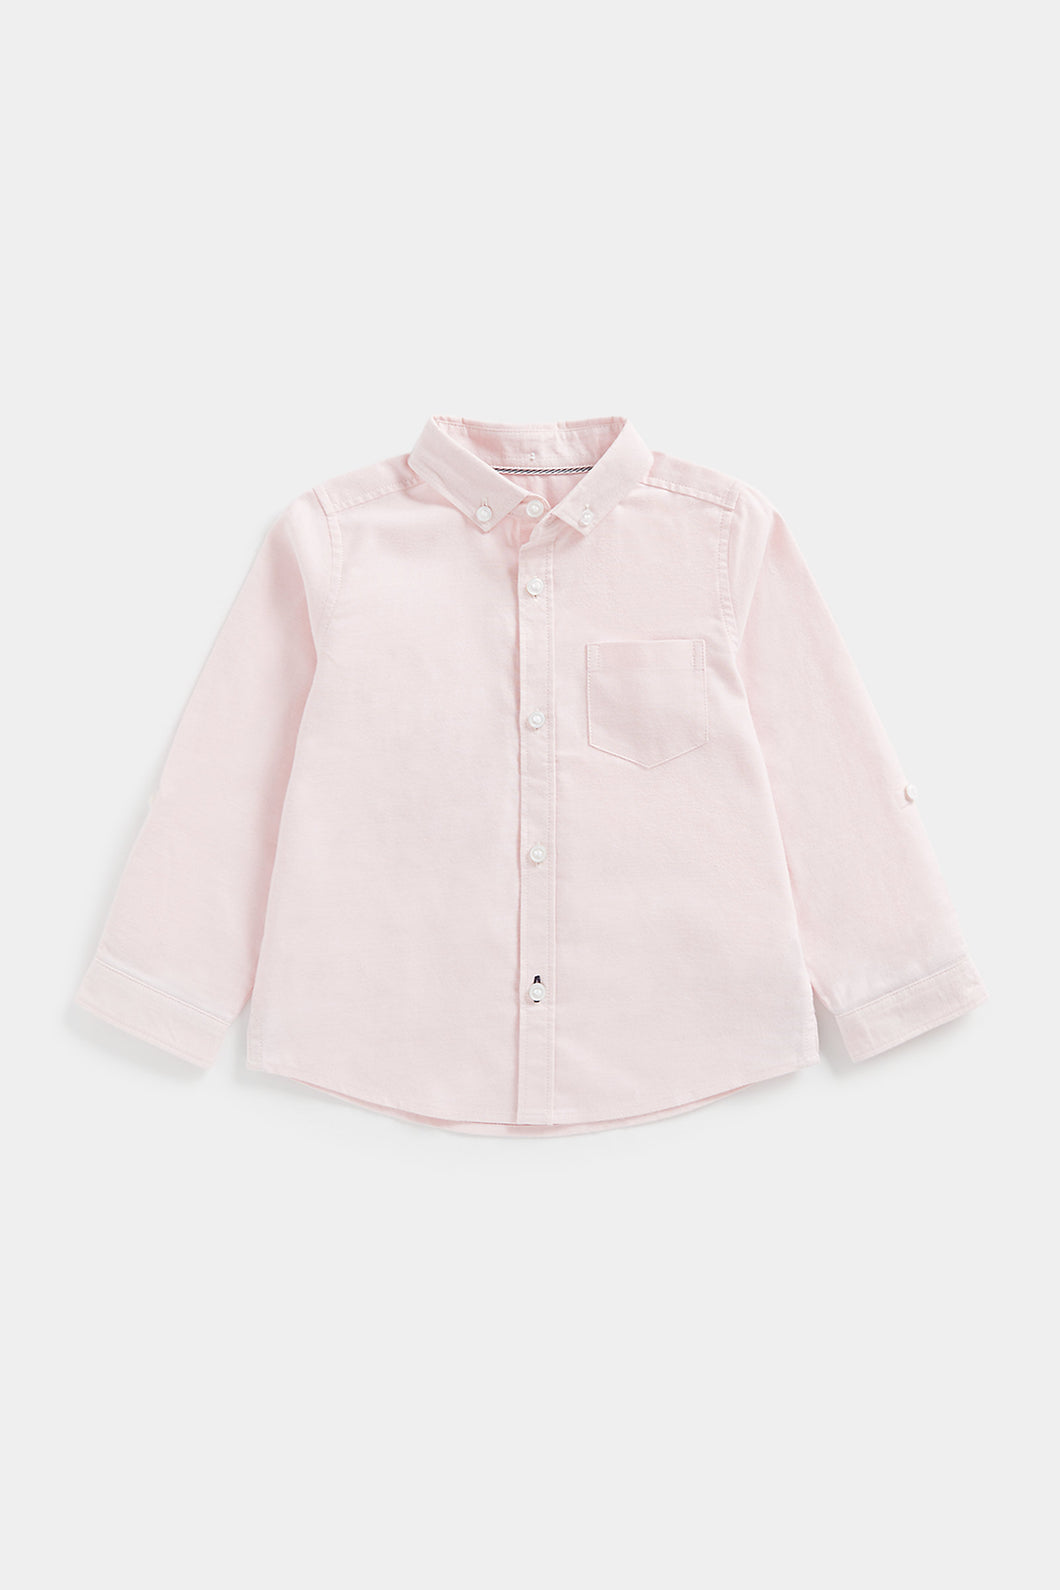 Mothercare Pink Cotton Shirt